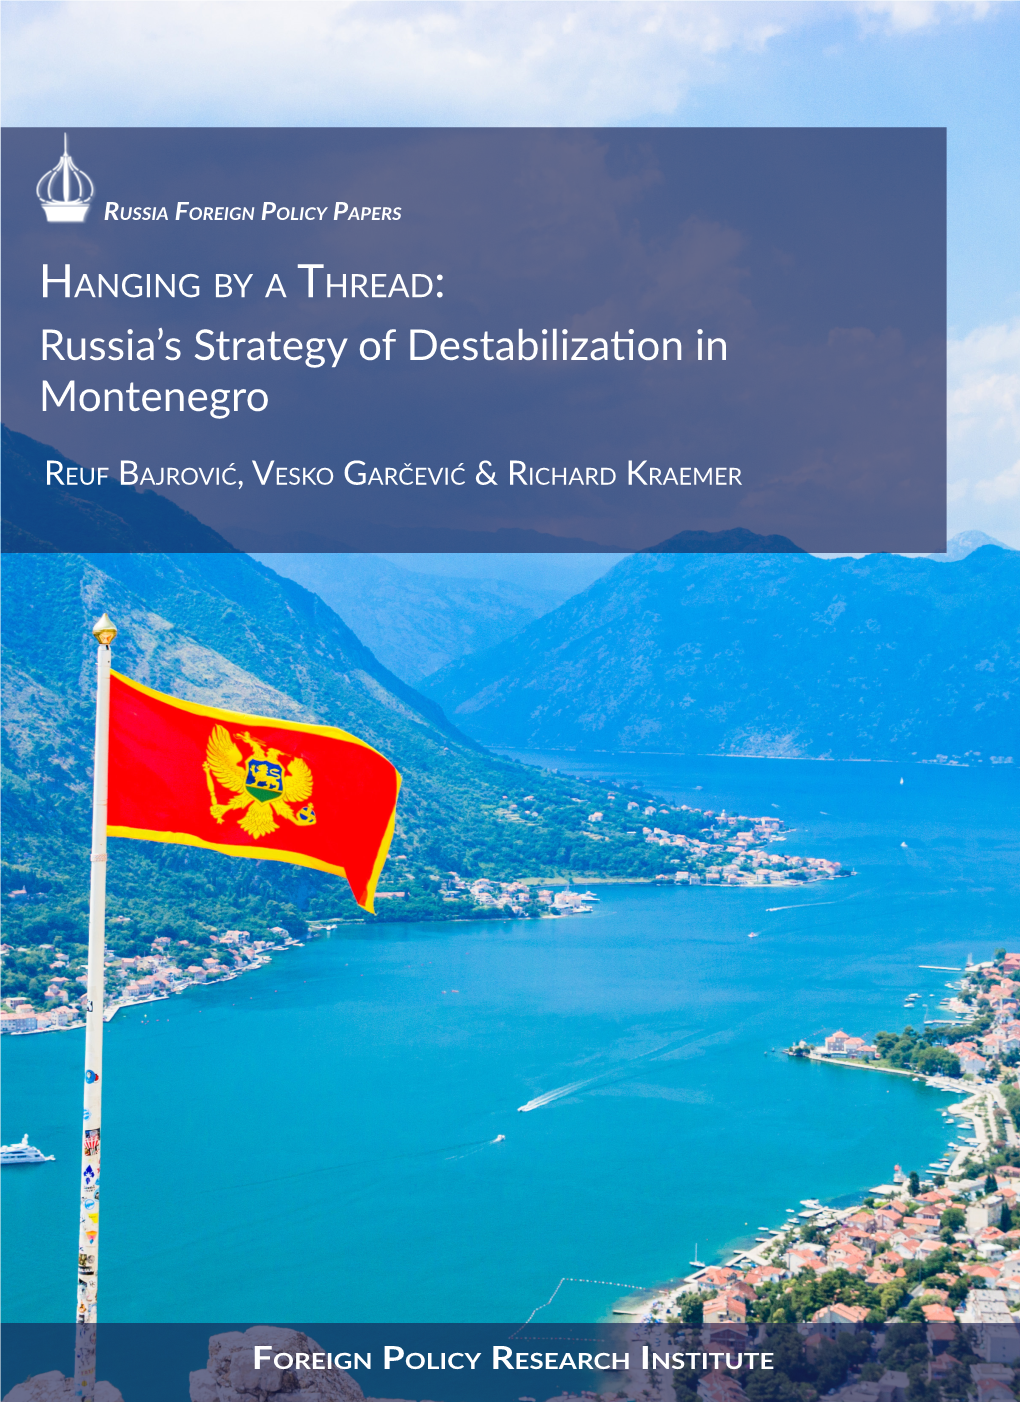 Russia's Strategy of Destabilization in Montenegro